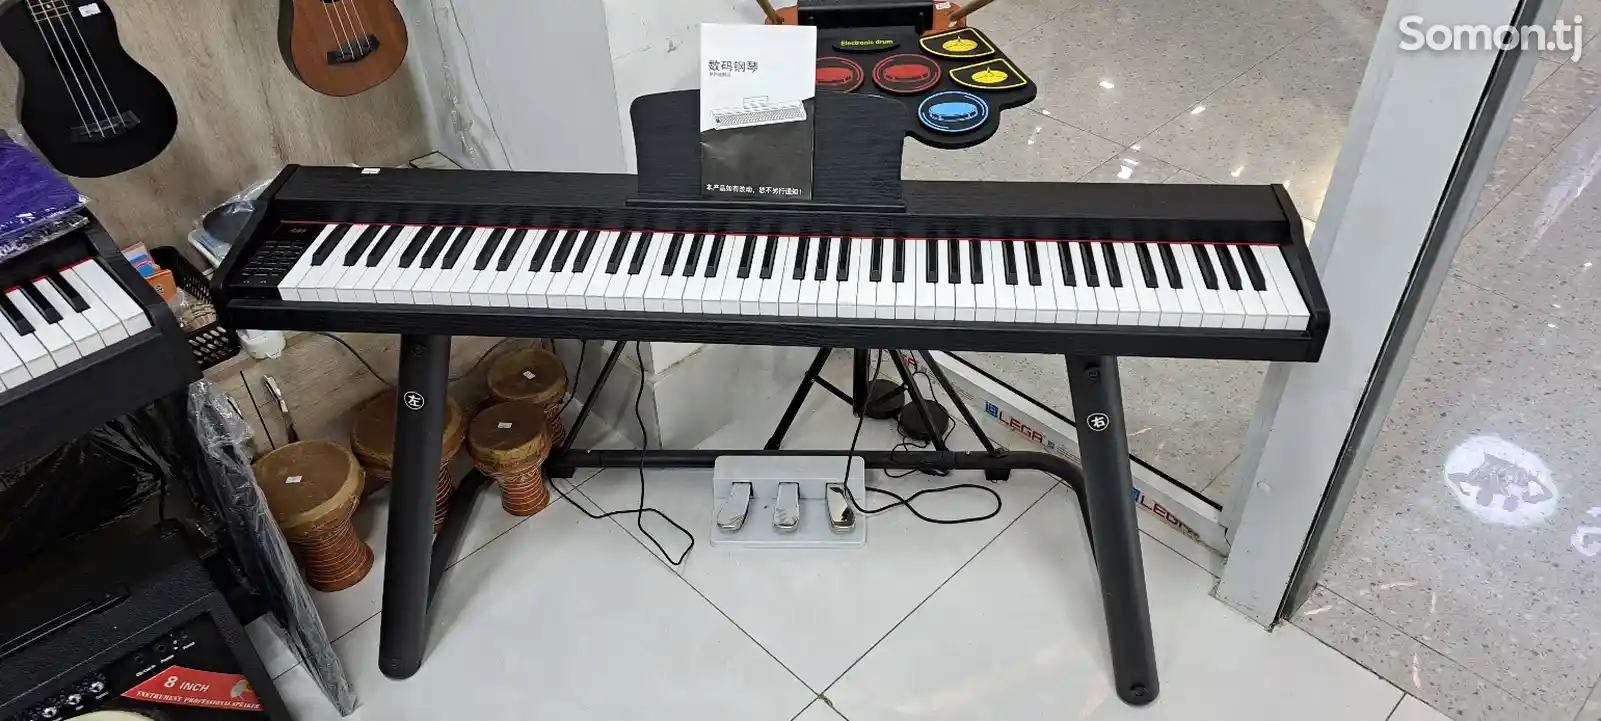 Пианино Nux-3